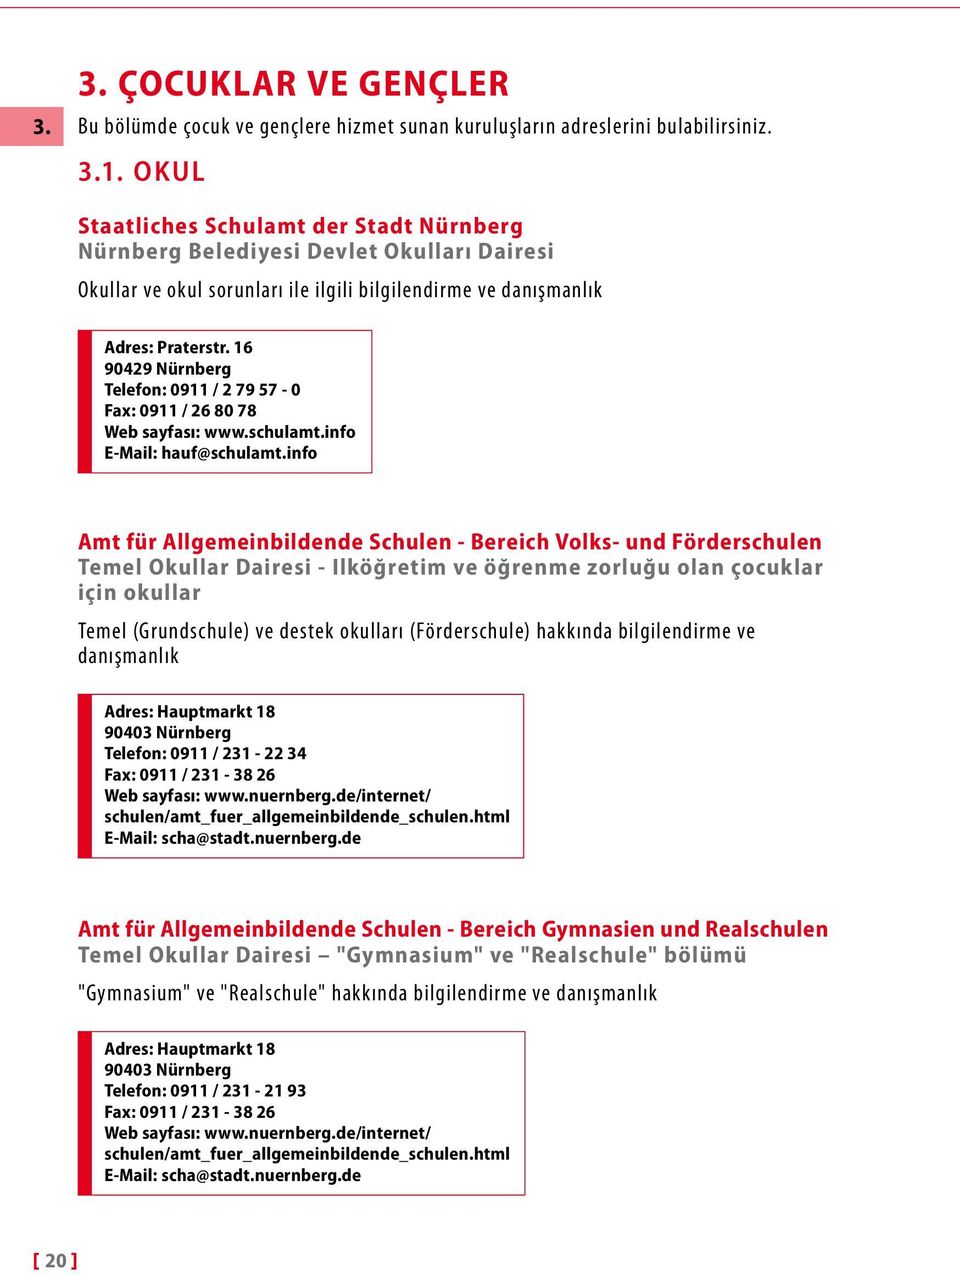 16 90429 Nürnberg Telefon: 0911 / 2 79 57-0 Fax: 0911 / 26 80 78 Web sayfası: www.schulamt.info E-Mail: hauf@schulamt.